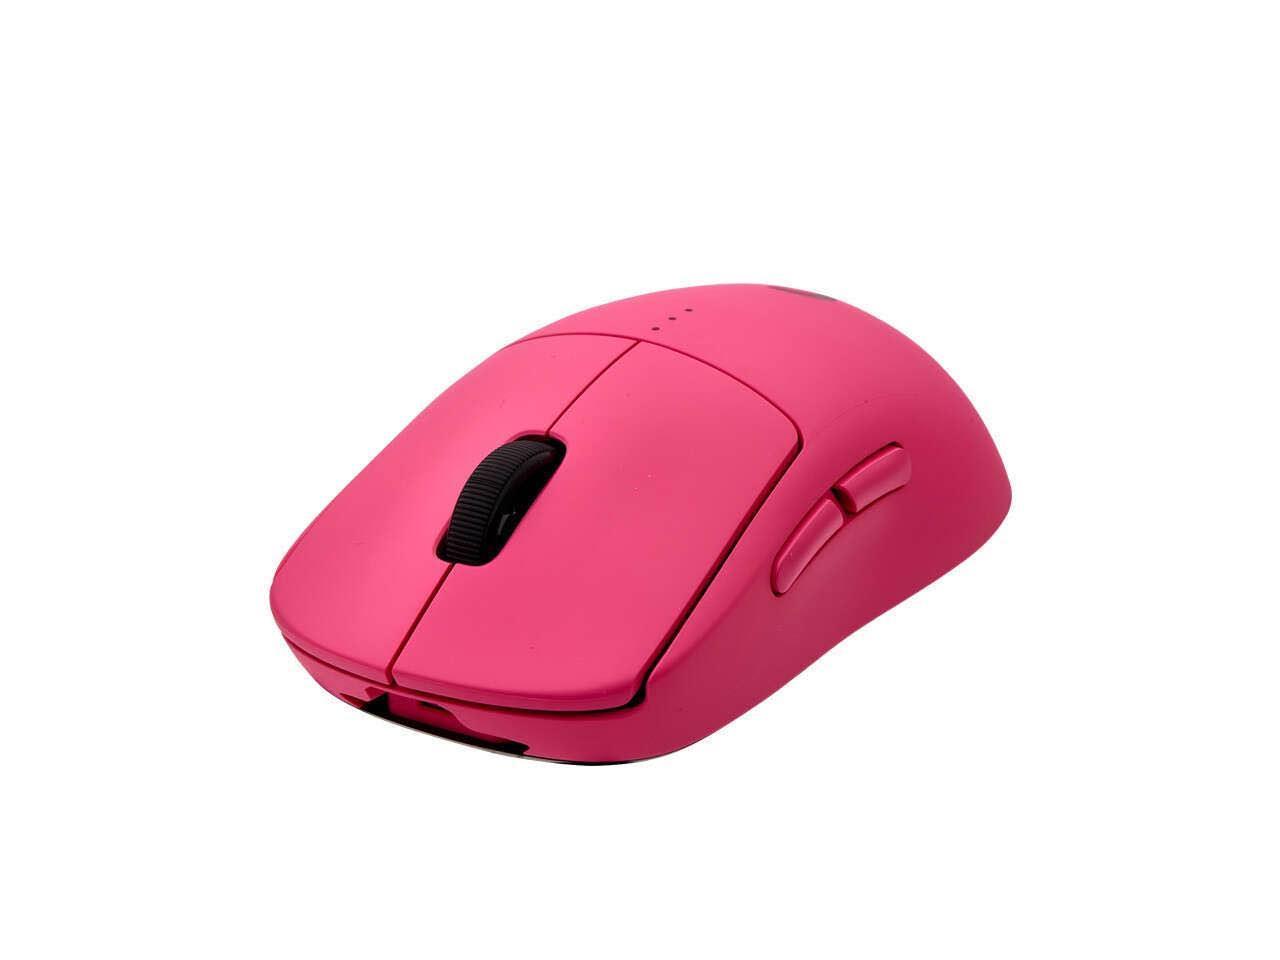 Logitech G Pro Wireless Gaming Mouse with Esports Grade Performance  LIGHTSPEED Wireless HERO 16K Sensor, Pink(limited edition)